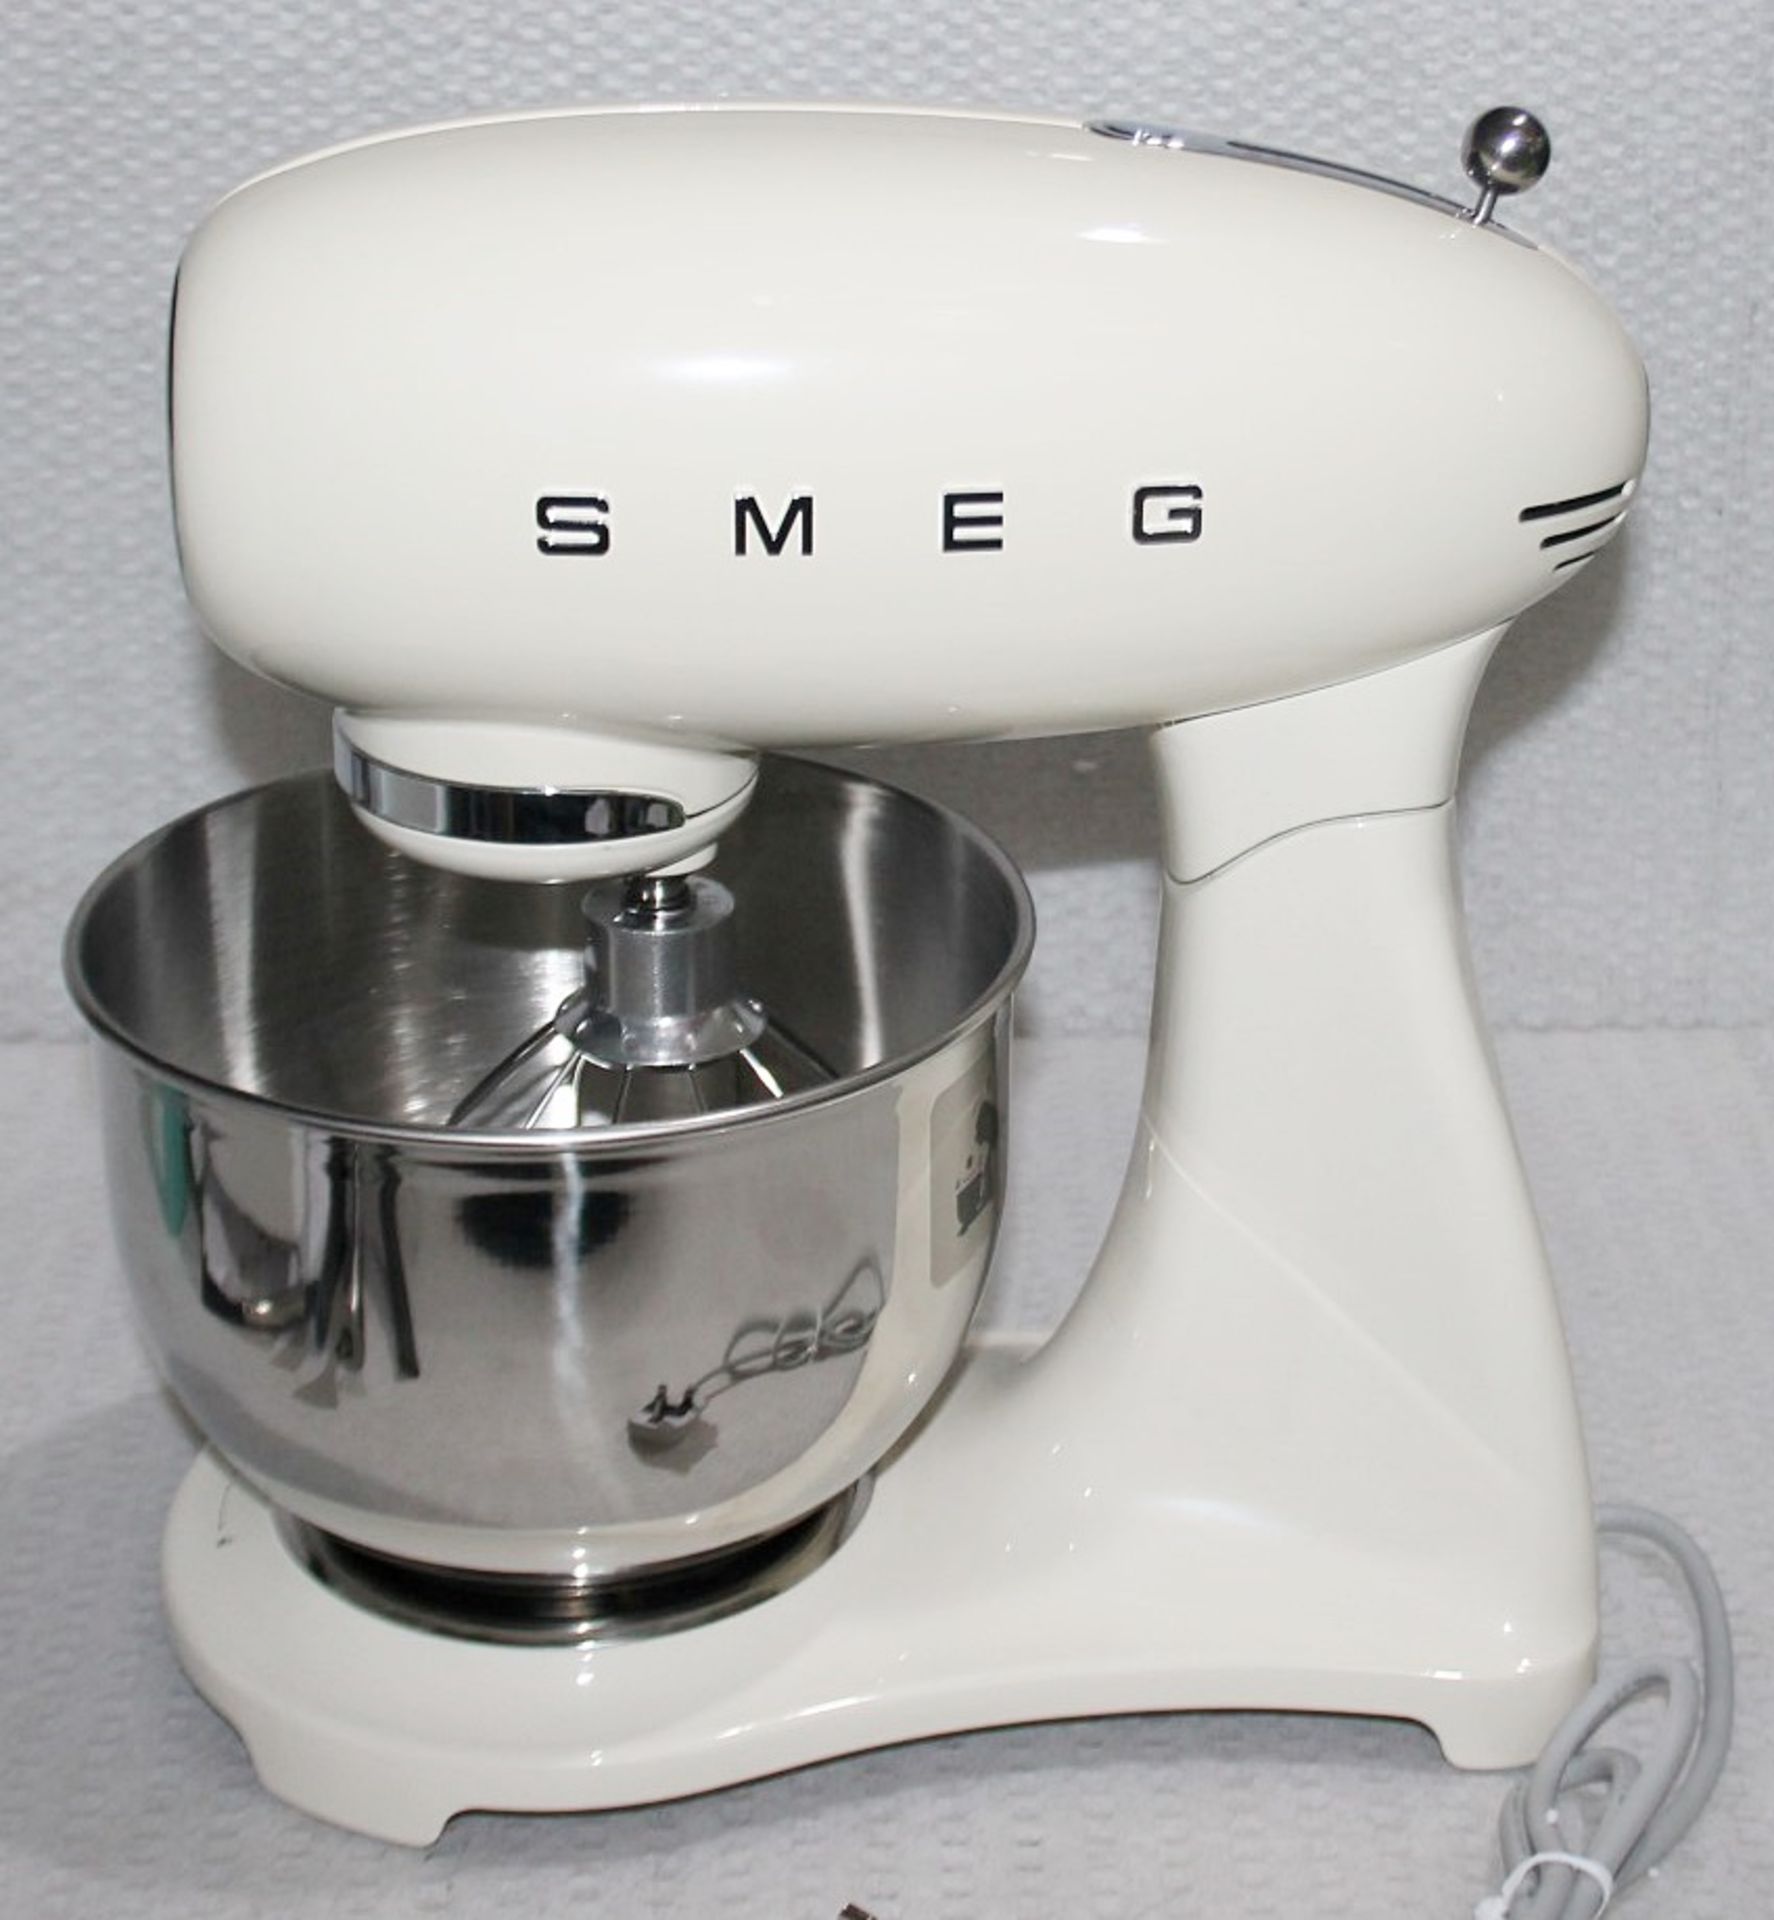 1 x SMEG Retro-style Stand Mixer (4.8L) In Cream - Original Price £499.00 - Unused Boxed Stock - Image 4 of 9